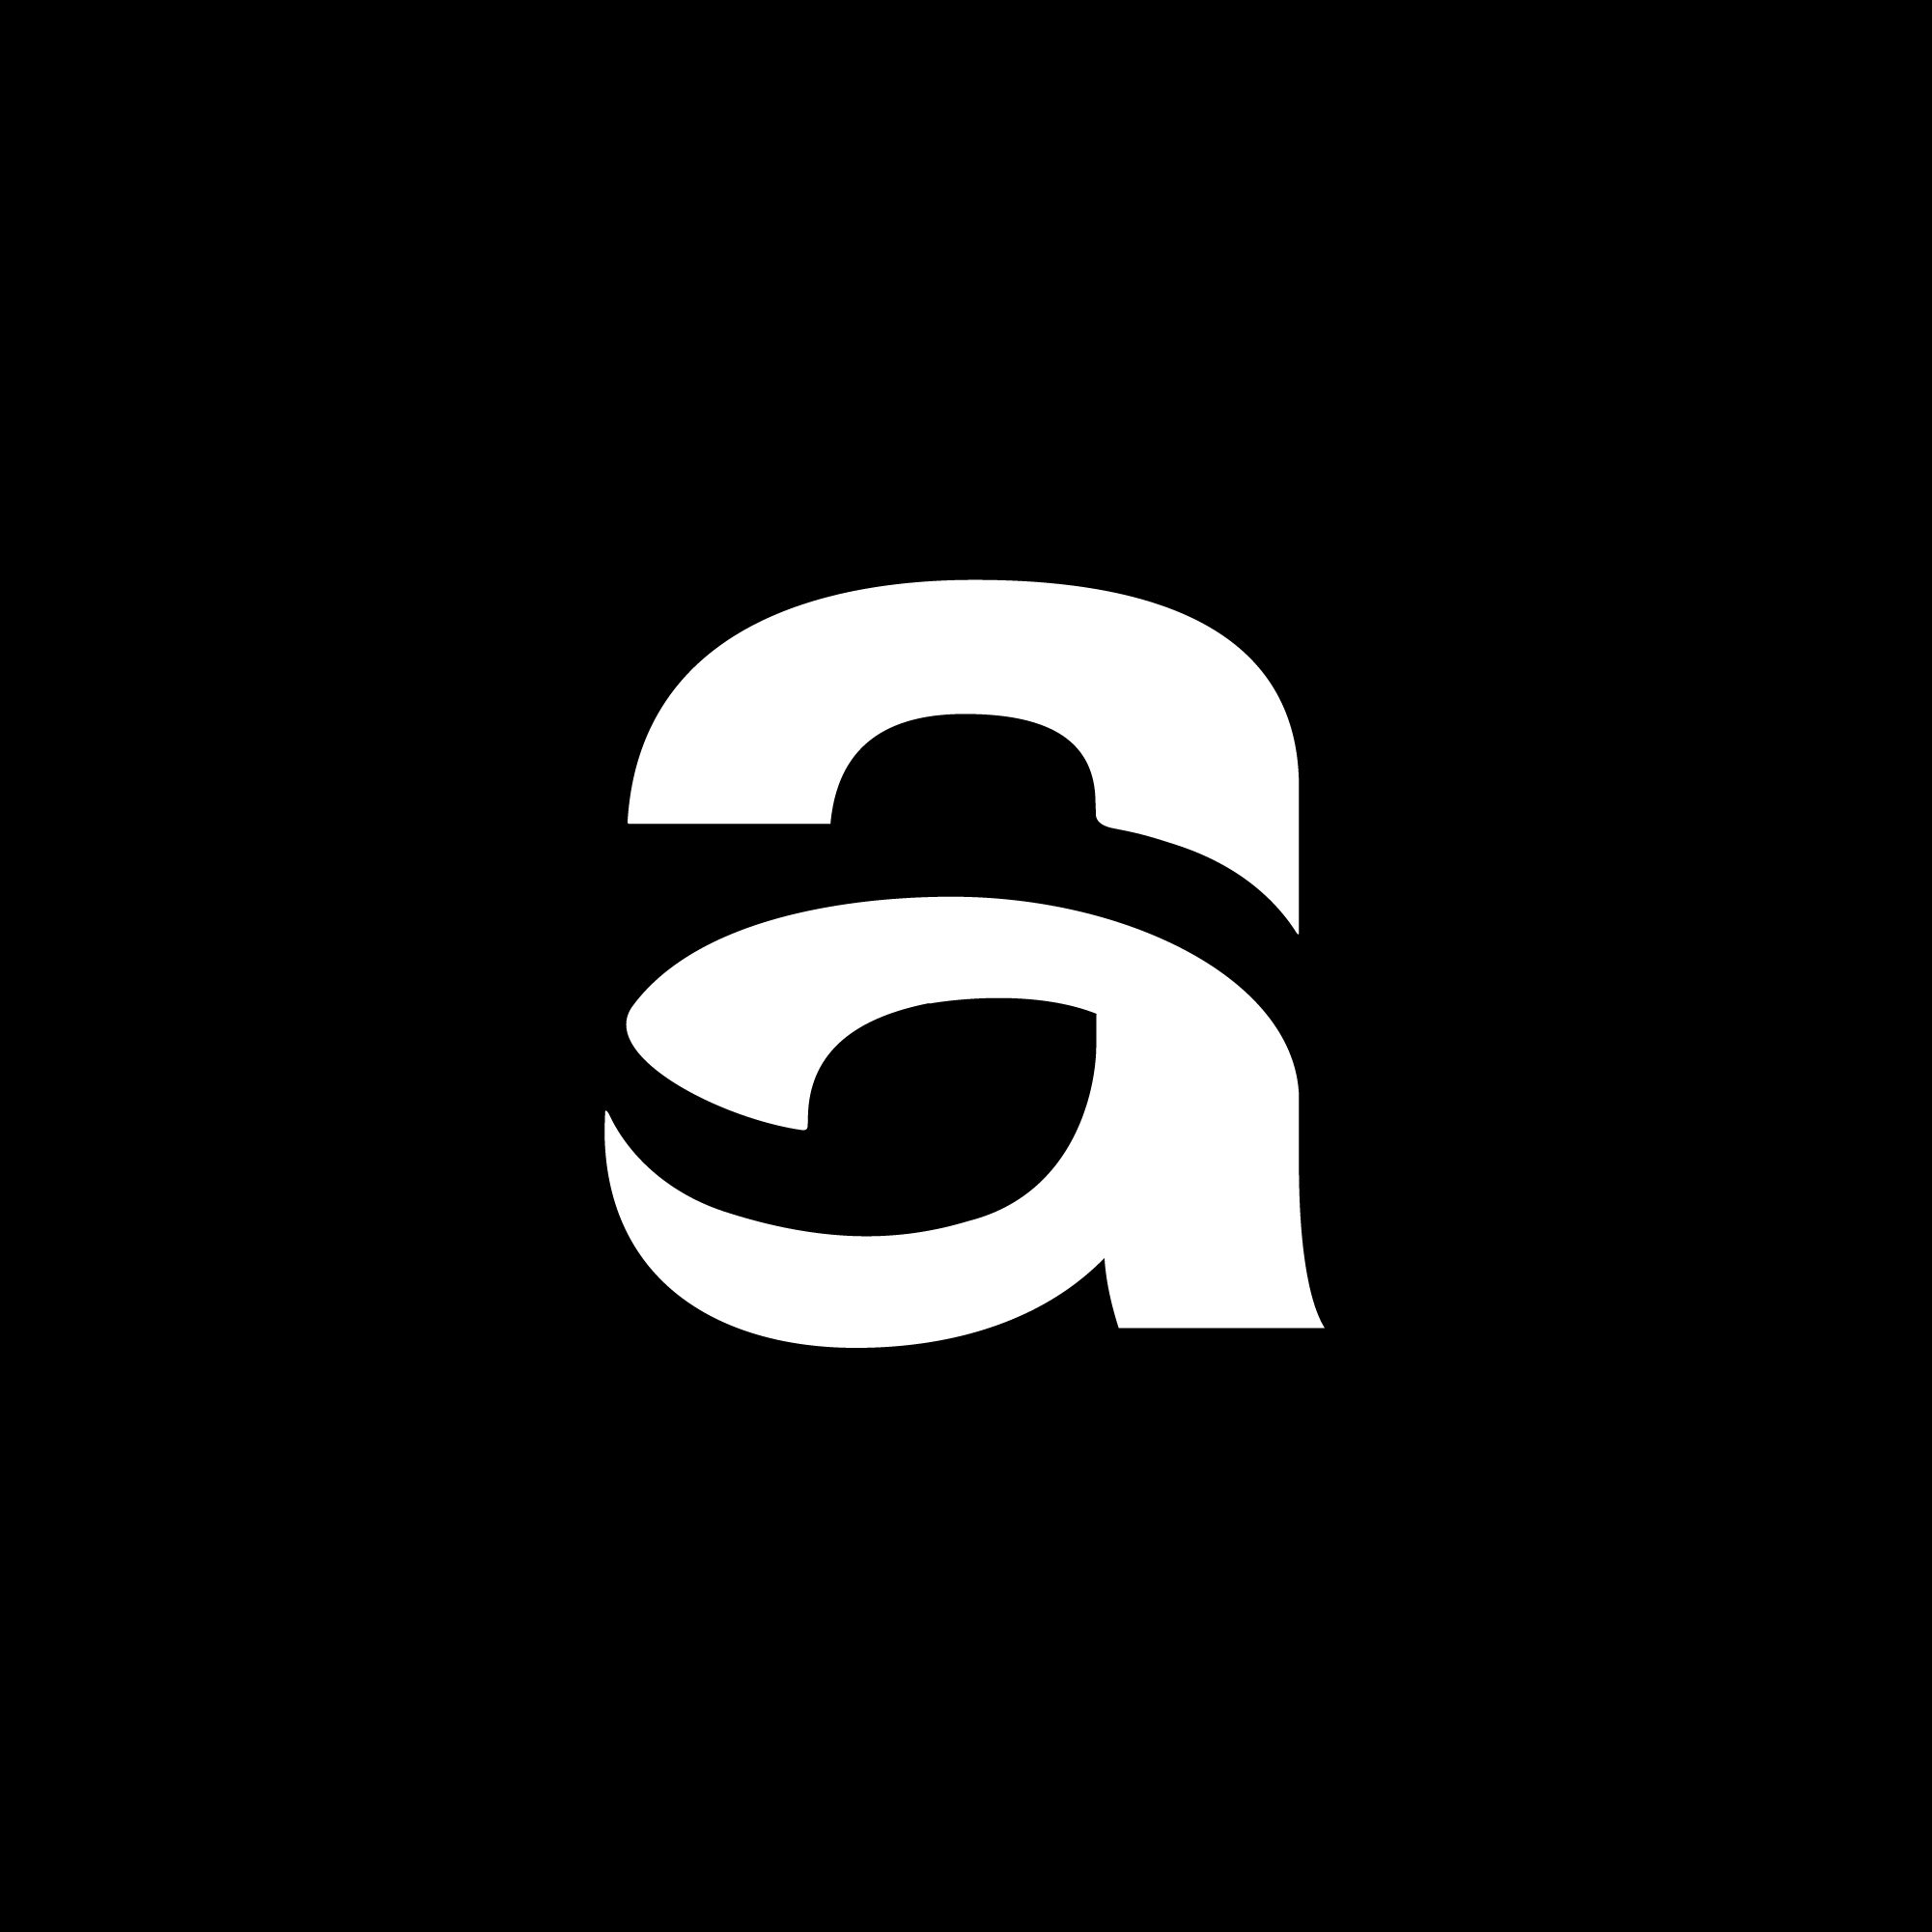 logo-design- black-white-minimalist-letter